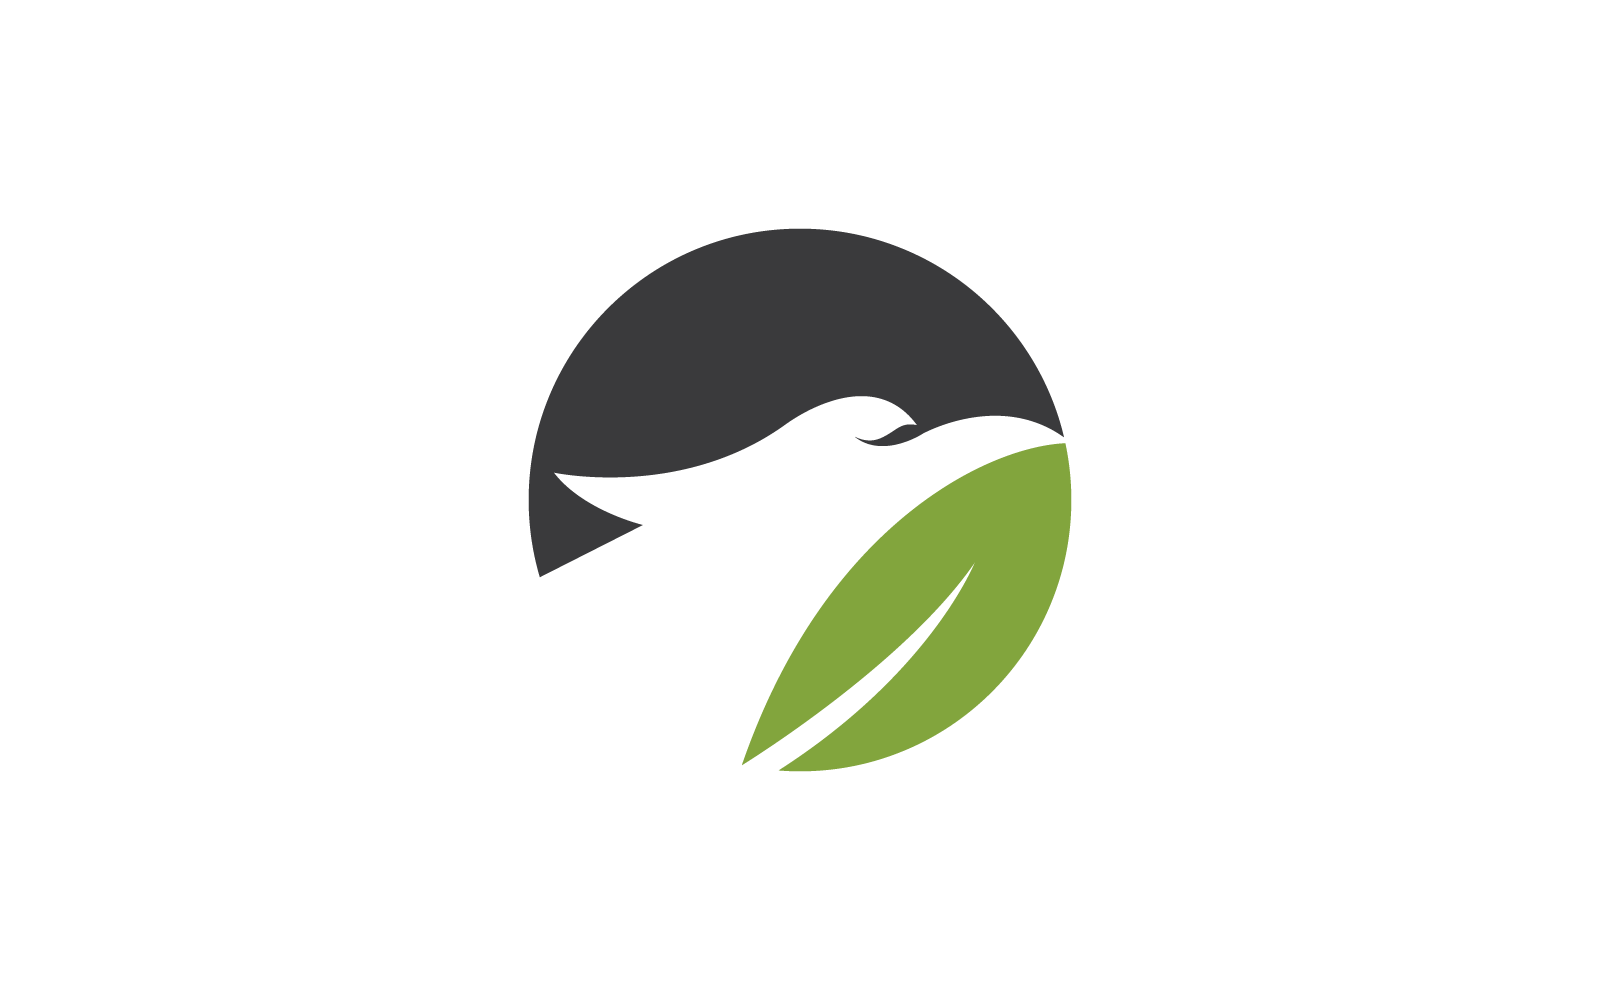 Falcon eagle bird with green leaf illustration logo design